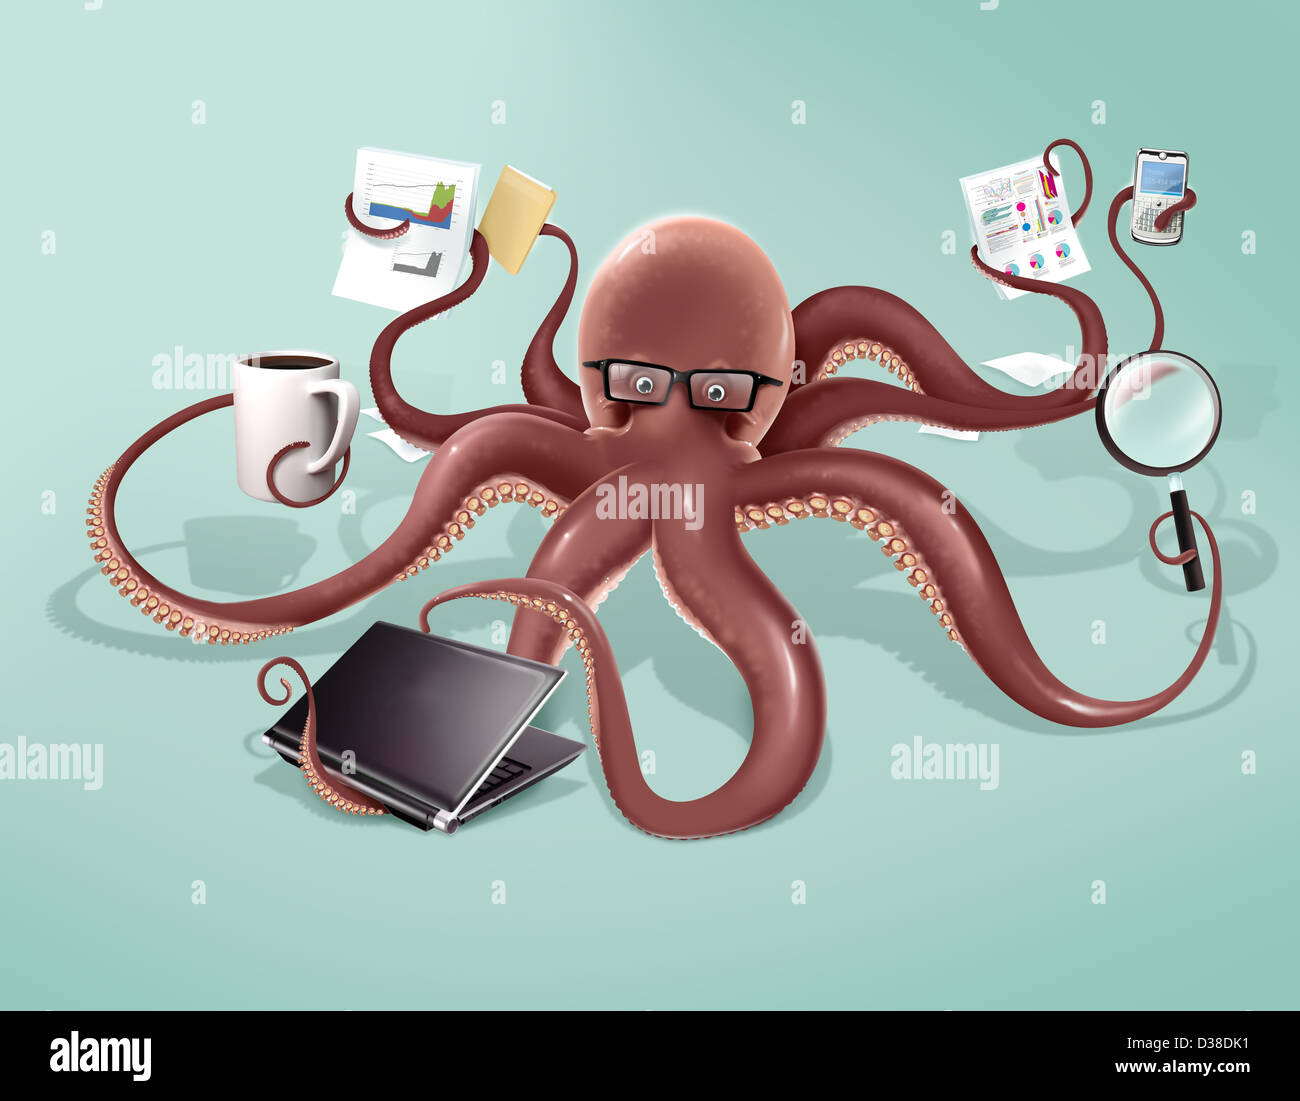 Illustrative image of octopus multi tasking over colored background Stock Photo